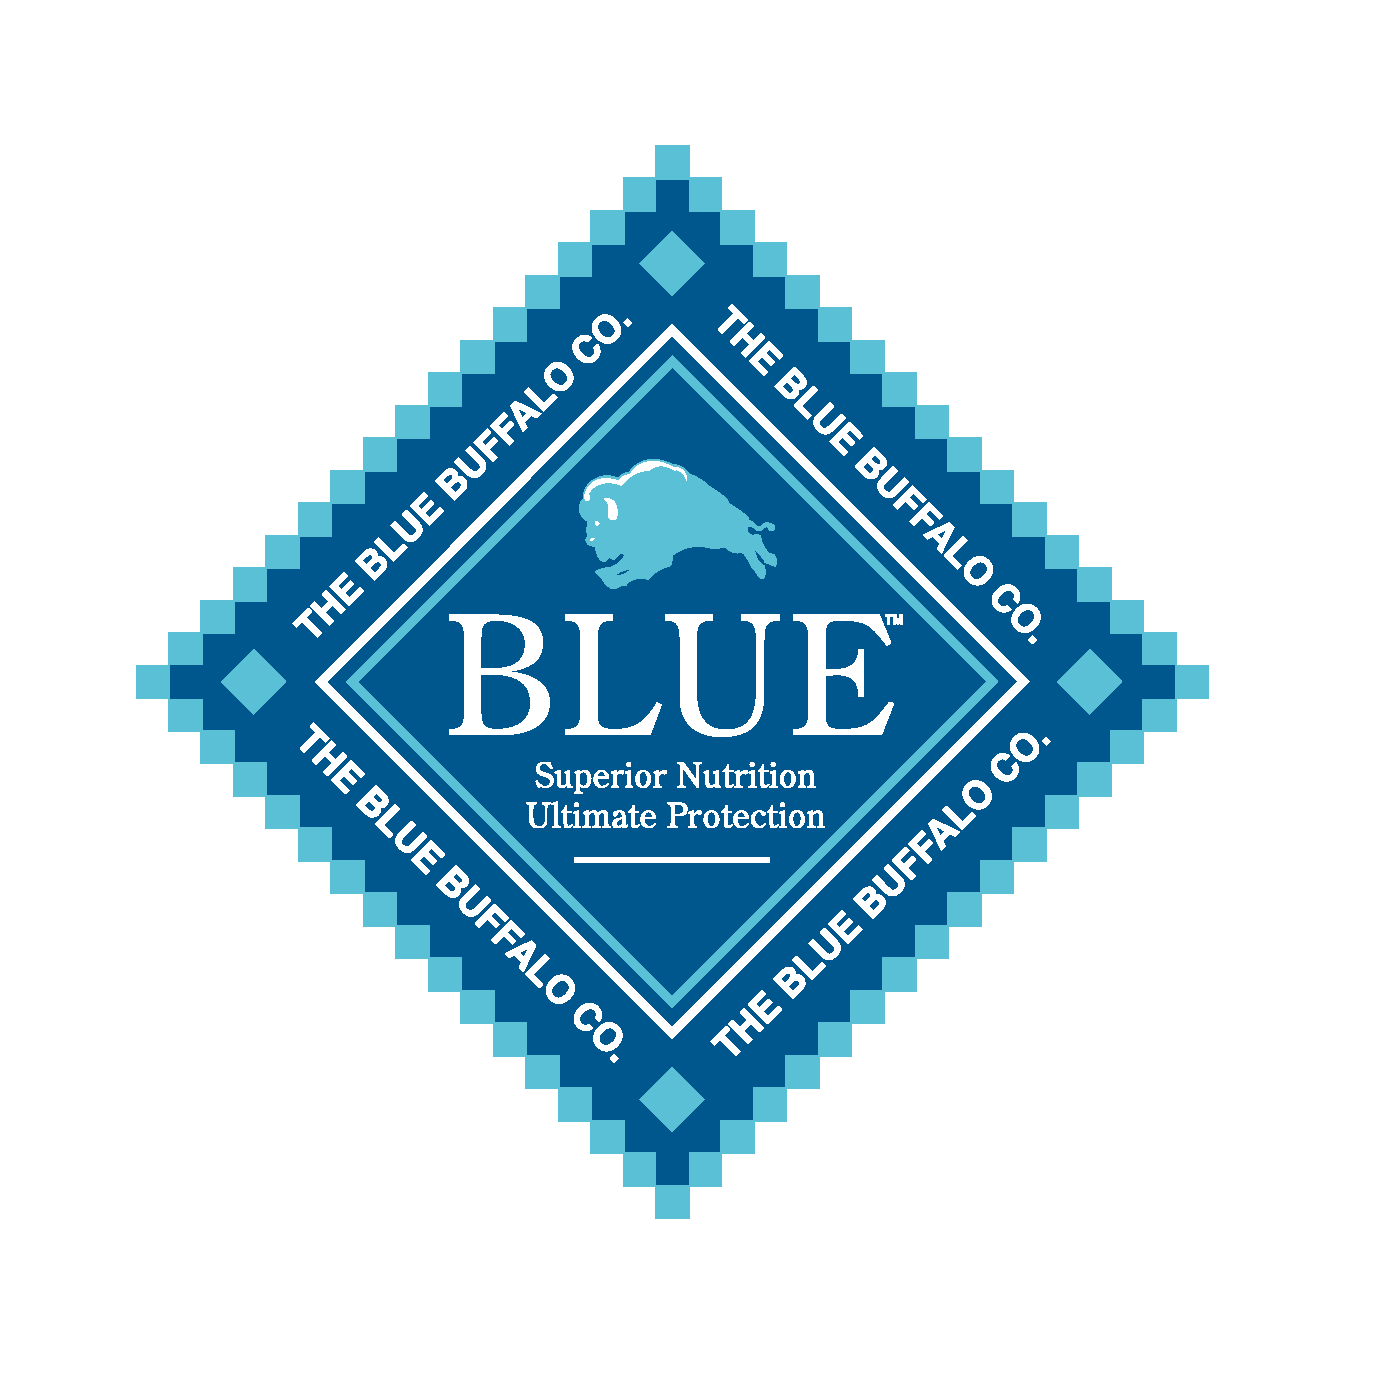 Blue Buffalo Cat Food Reviews [year]: Moet je het kopen? 1